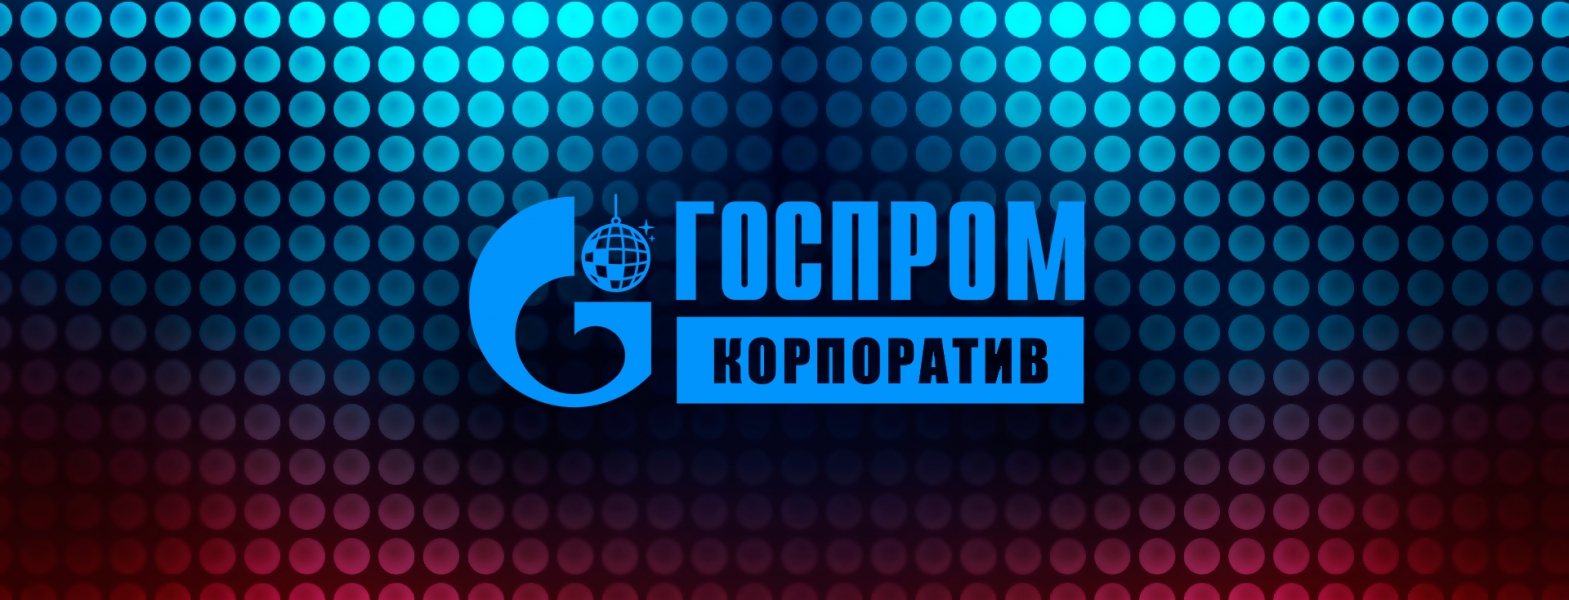 Квест Корпоратив Госпрома, ВыХод. Москва.